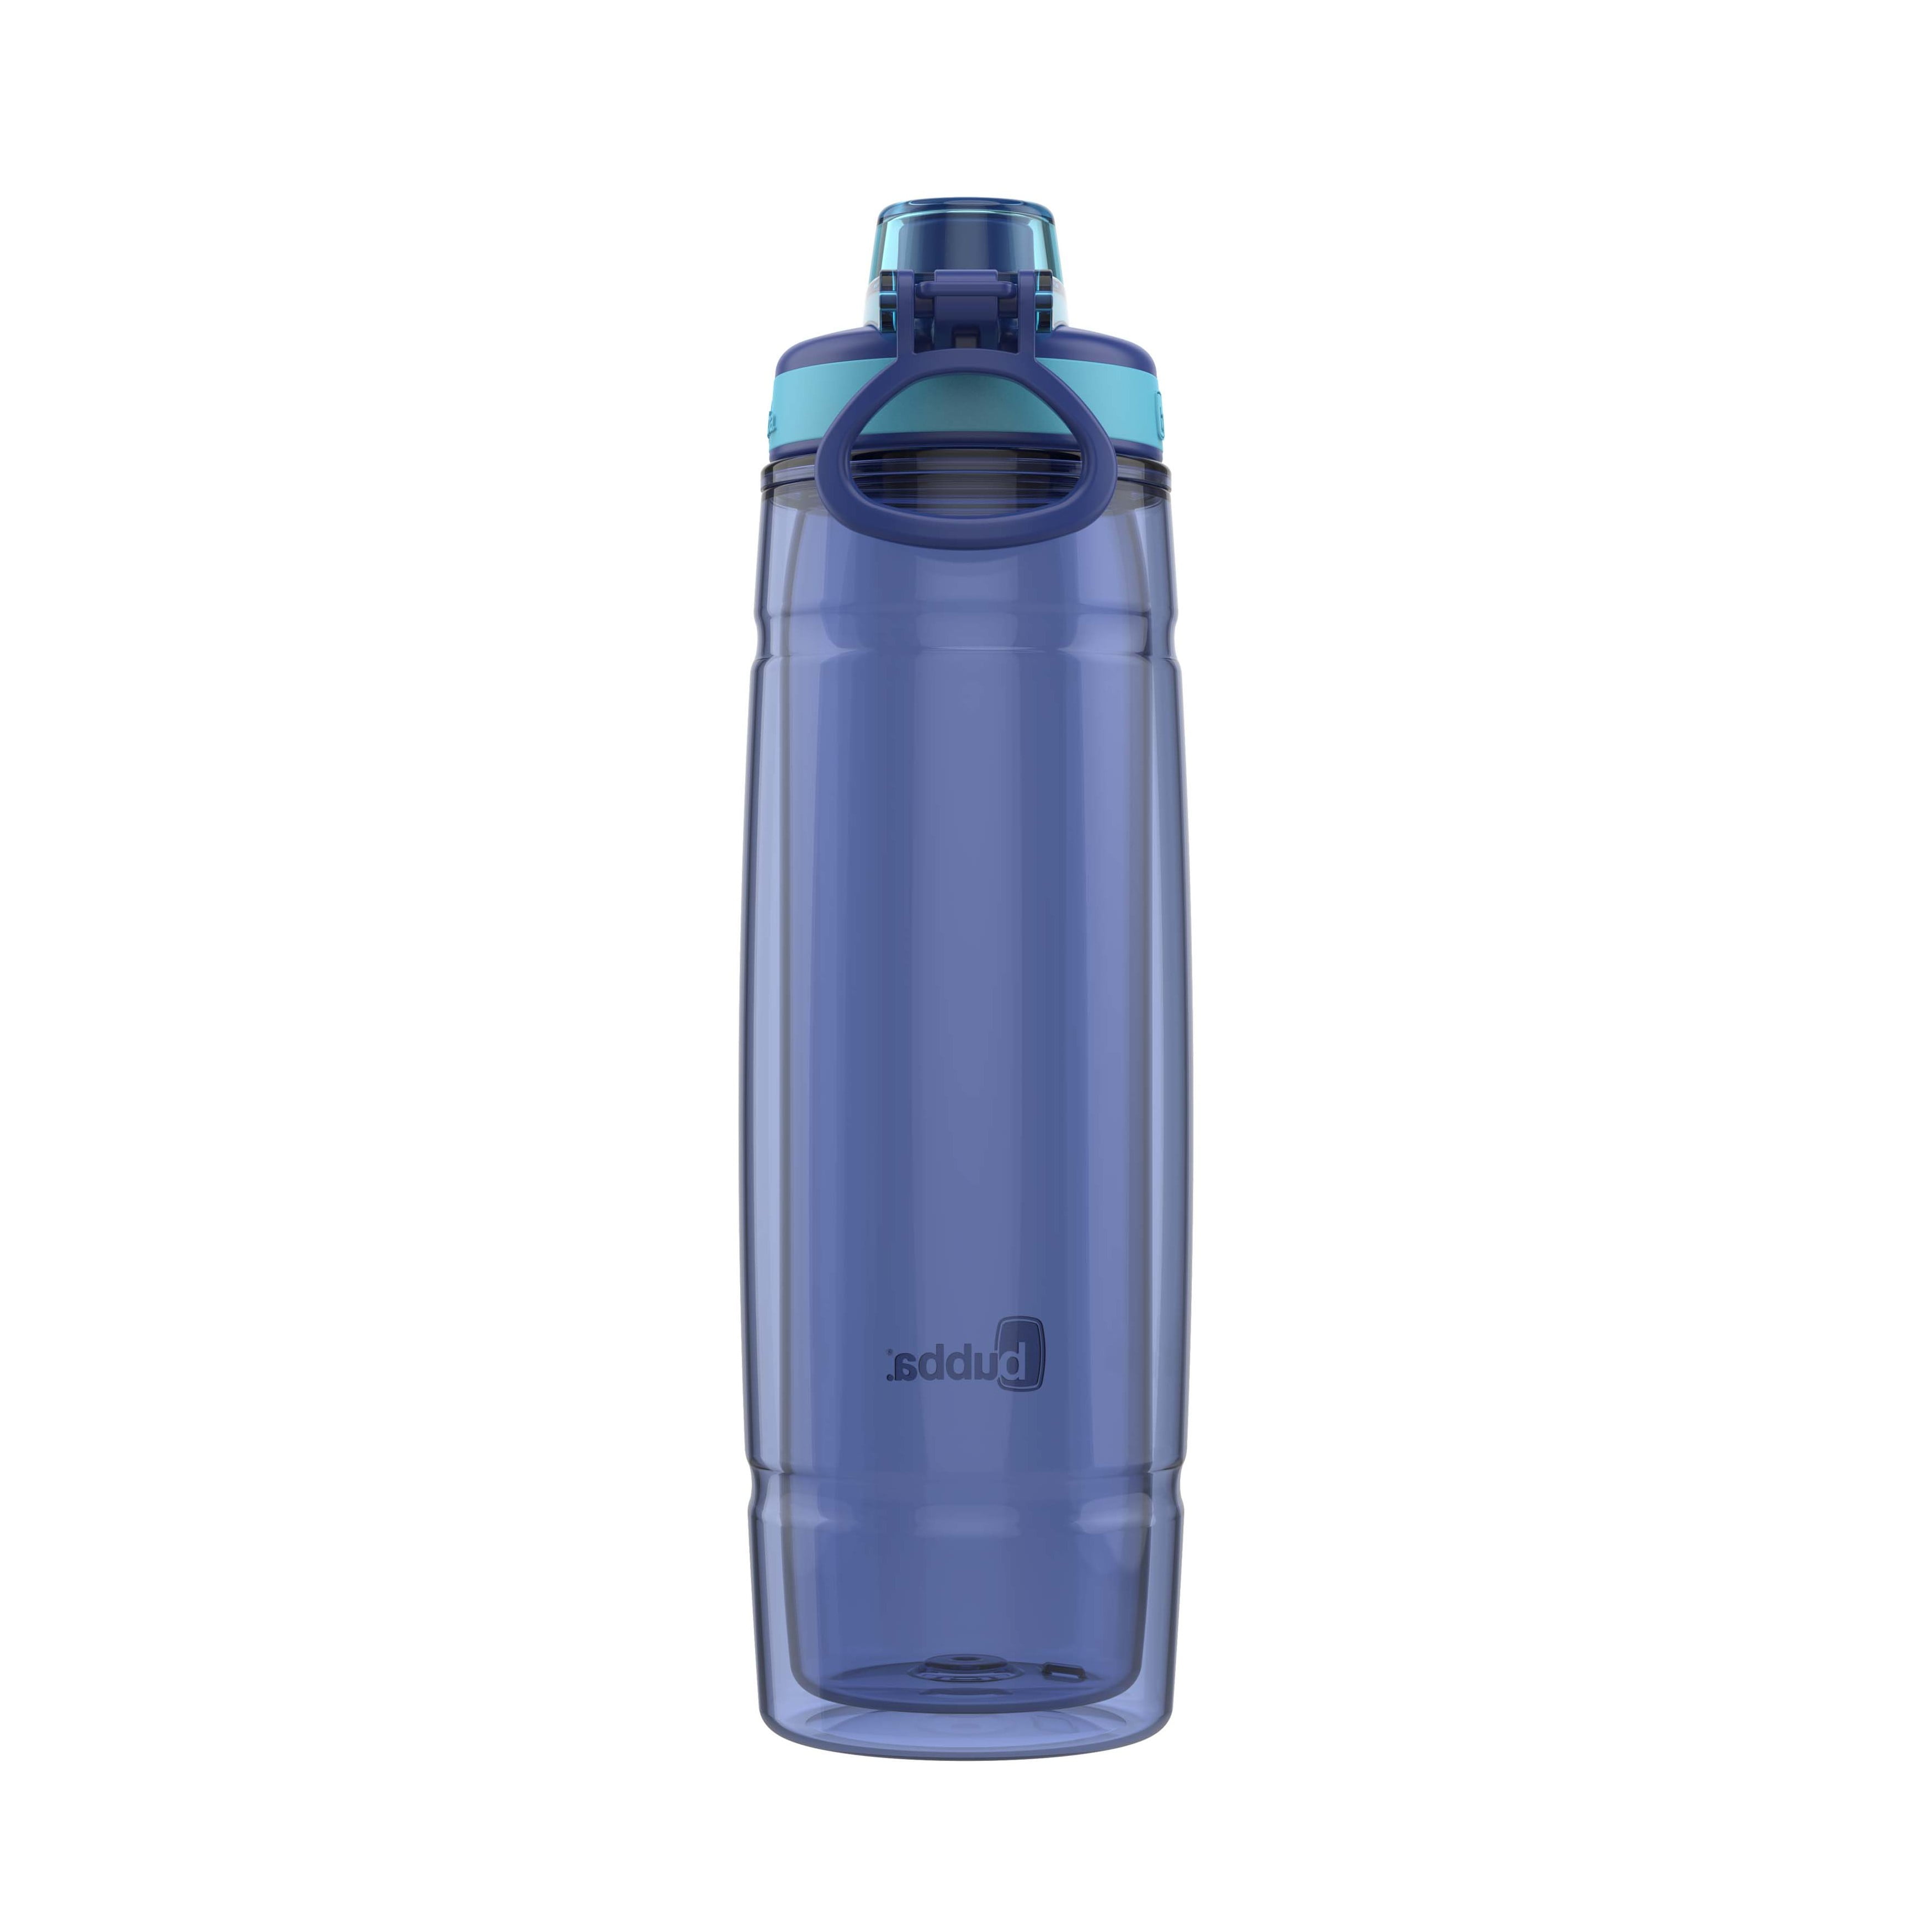 Bubba Flo Duo Water Bottle, 24 oz, Teal